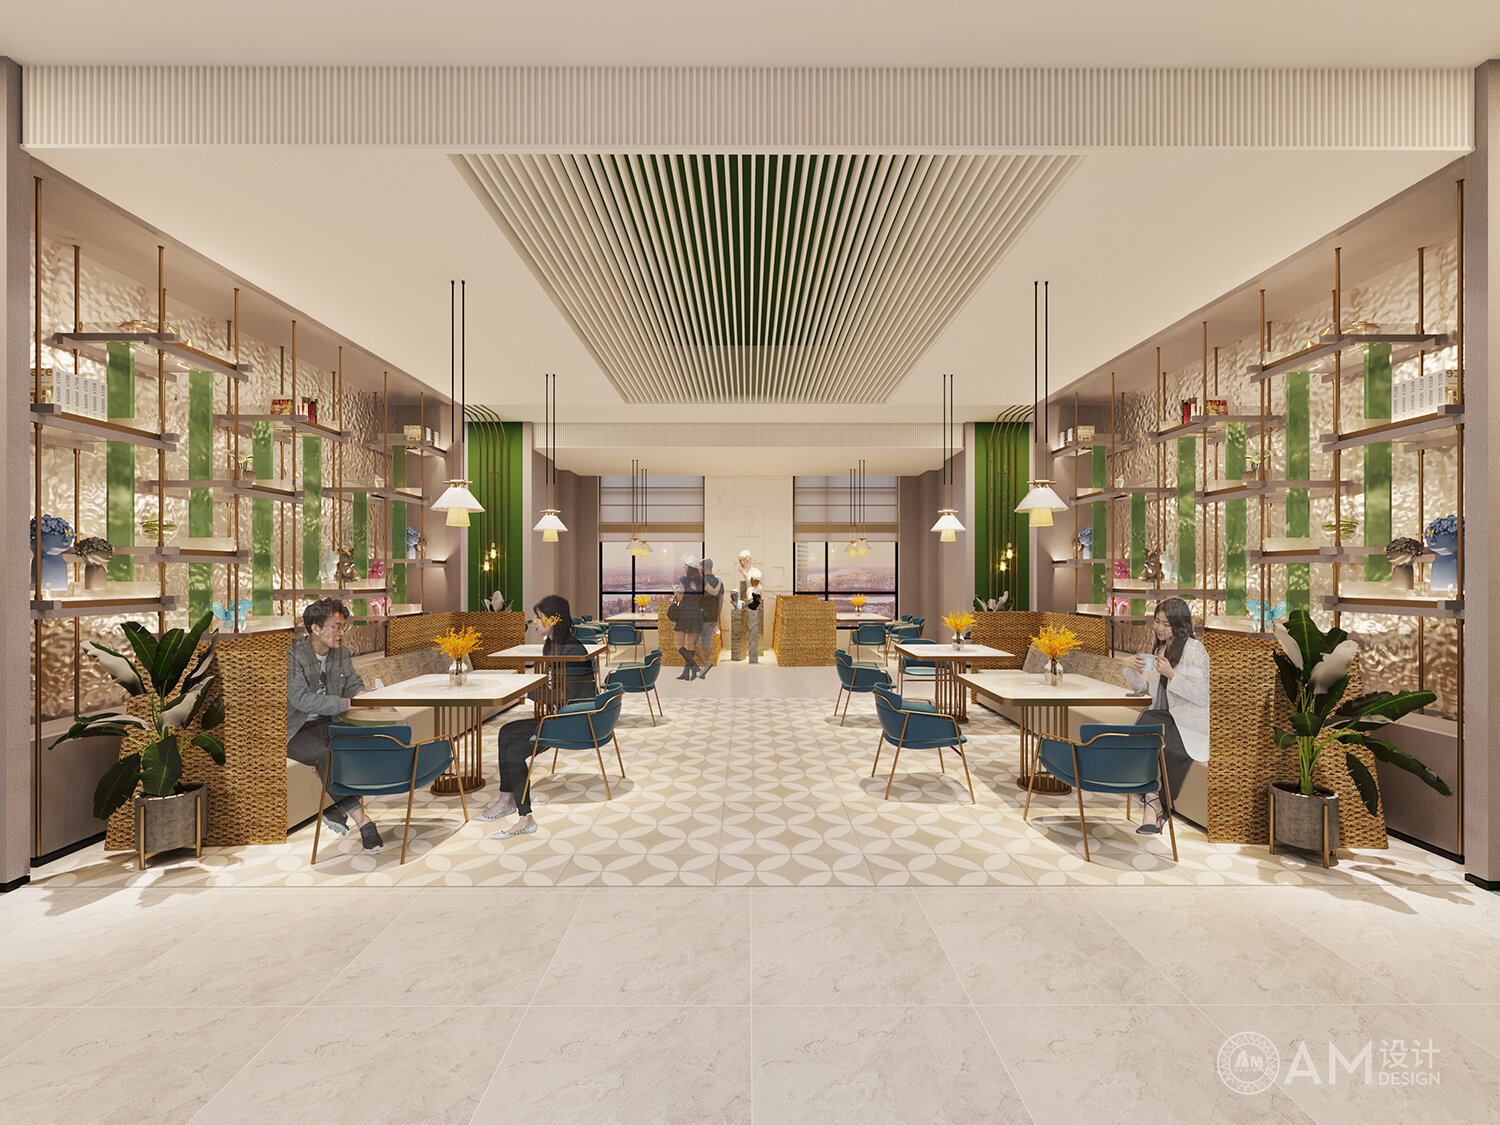 AM DESIGN | Rest area design of Jianguo Hotel in Weinan, Shaanxi